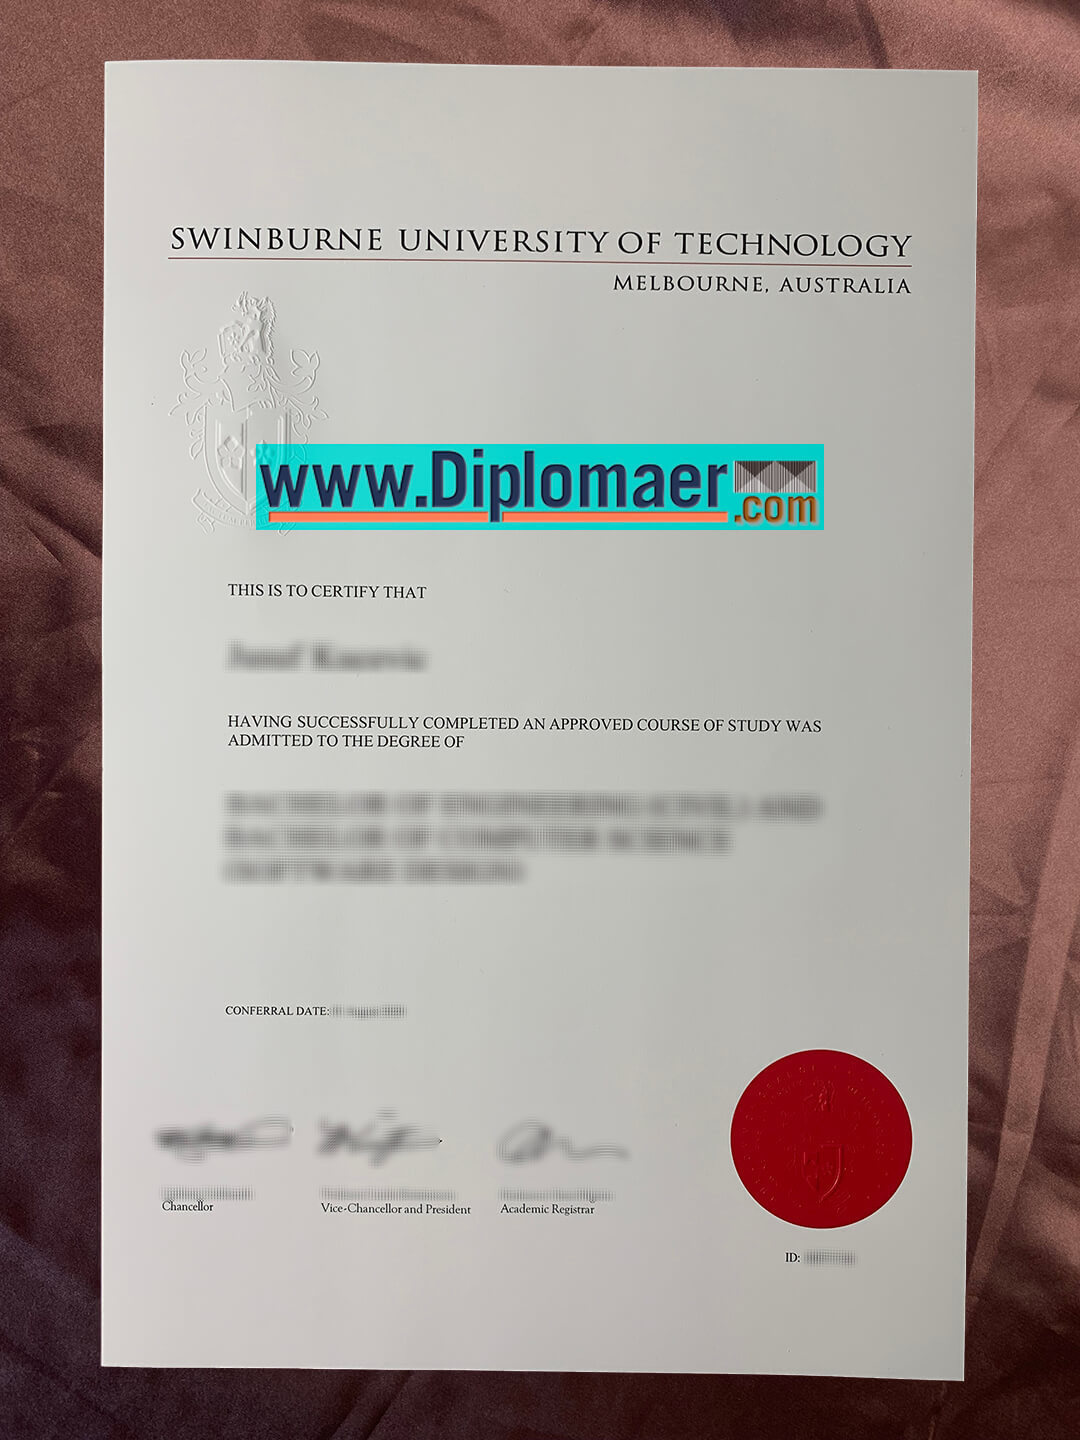 Swinburn University of Technology fake diploma - How to purchase a fake Swinburne University of Technology diploma in Melbourne?